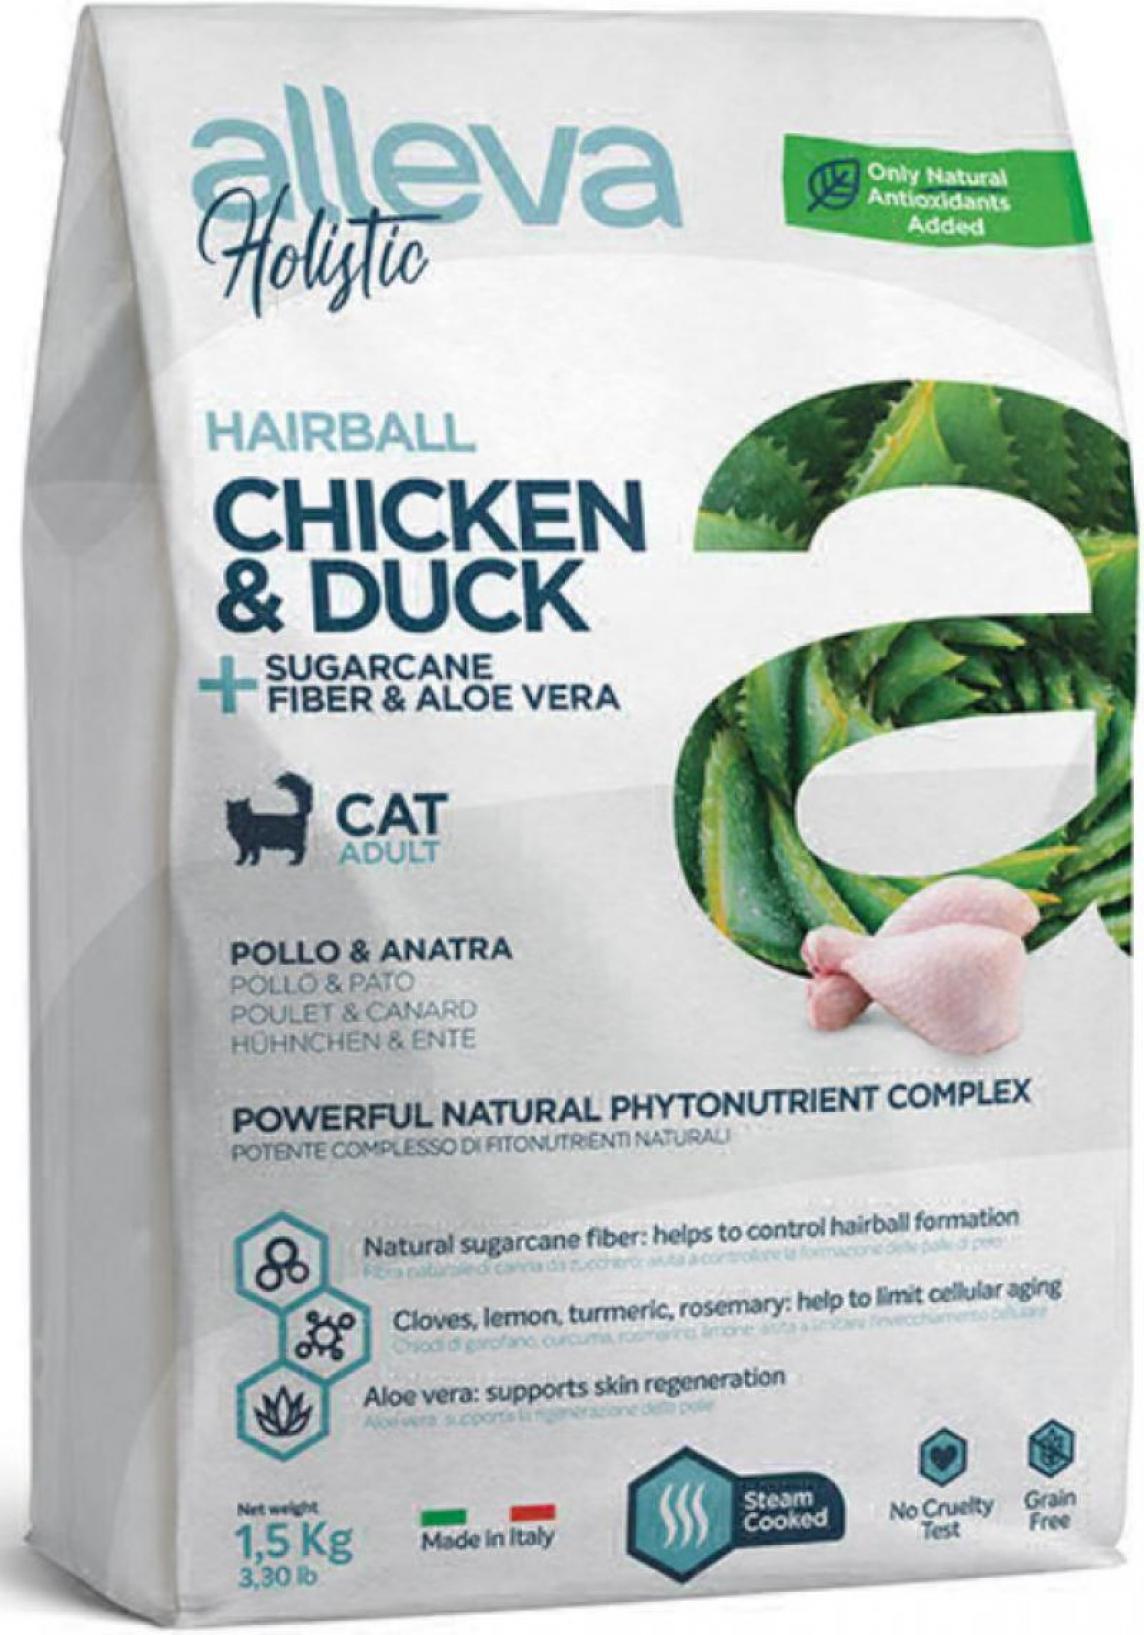 ALLEVA HOLISTIC CAT дк Hairball Adult Chicken & Duck  взрослых с курицей и уткой, волокнами сахарного тростника и алое вера 1,5 кг 2899, 8001001249